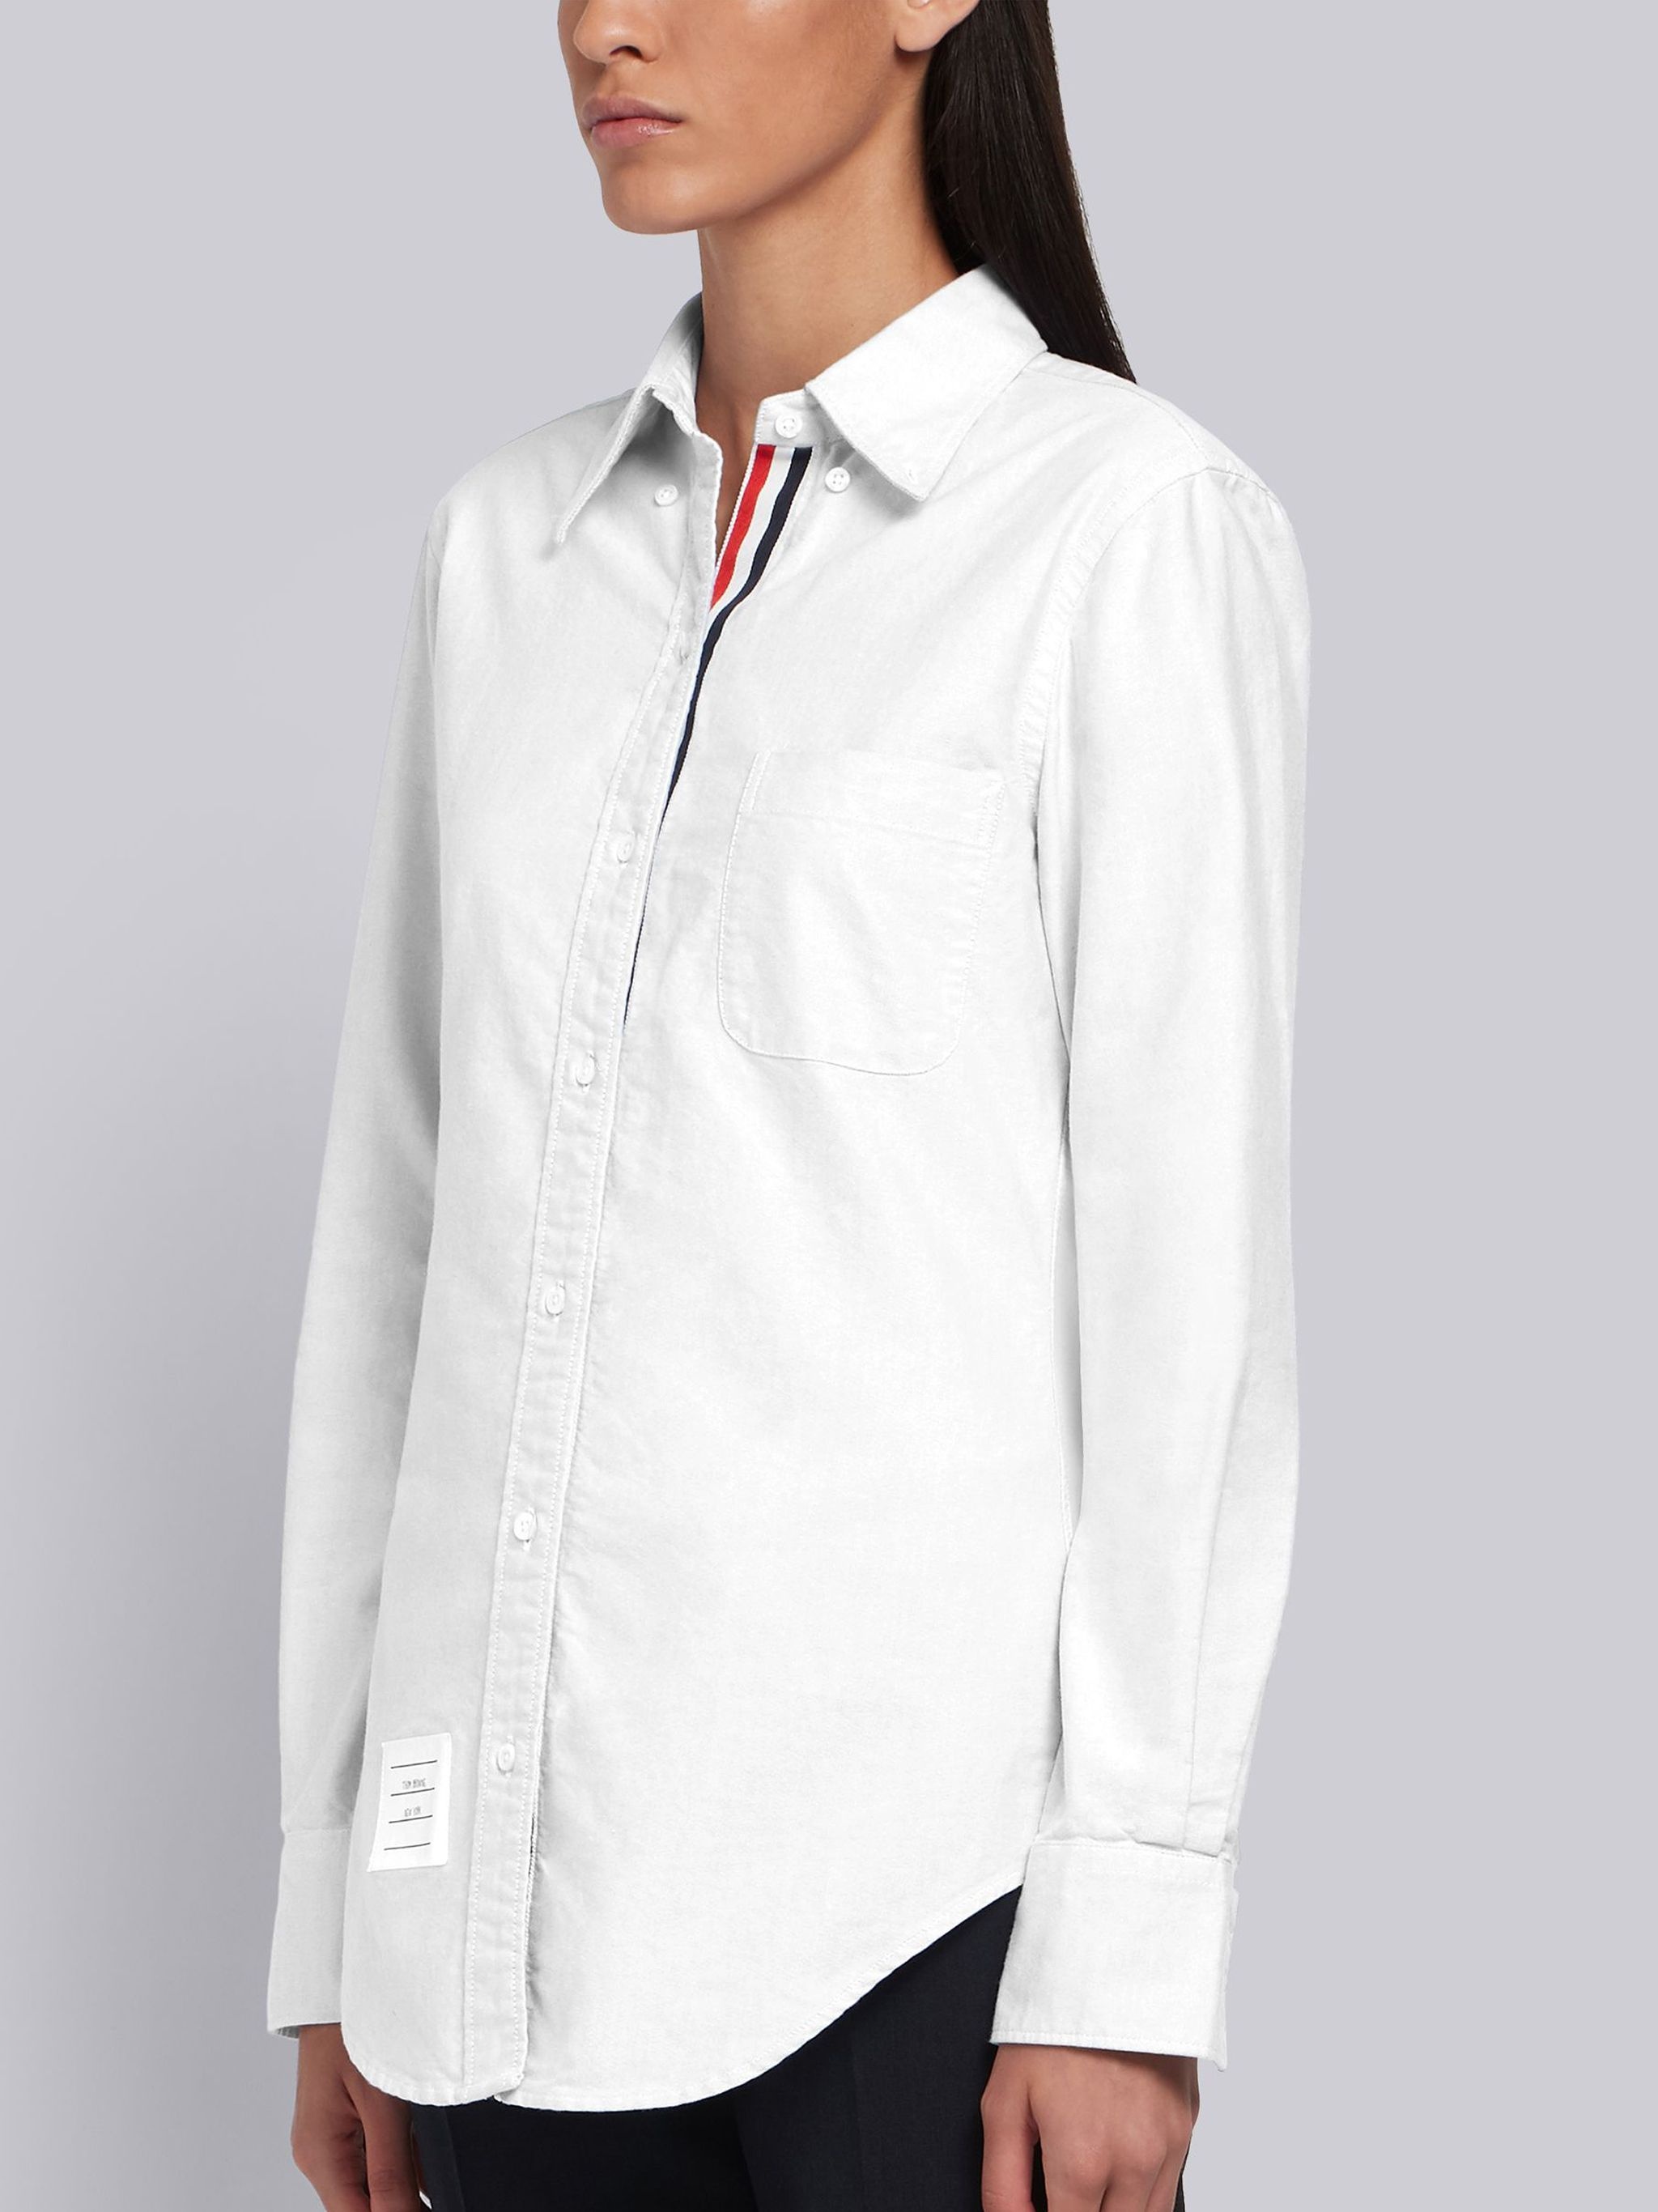 White Classic Oxford Grosgrain Placket Long Sleeve Shirt - 3